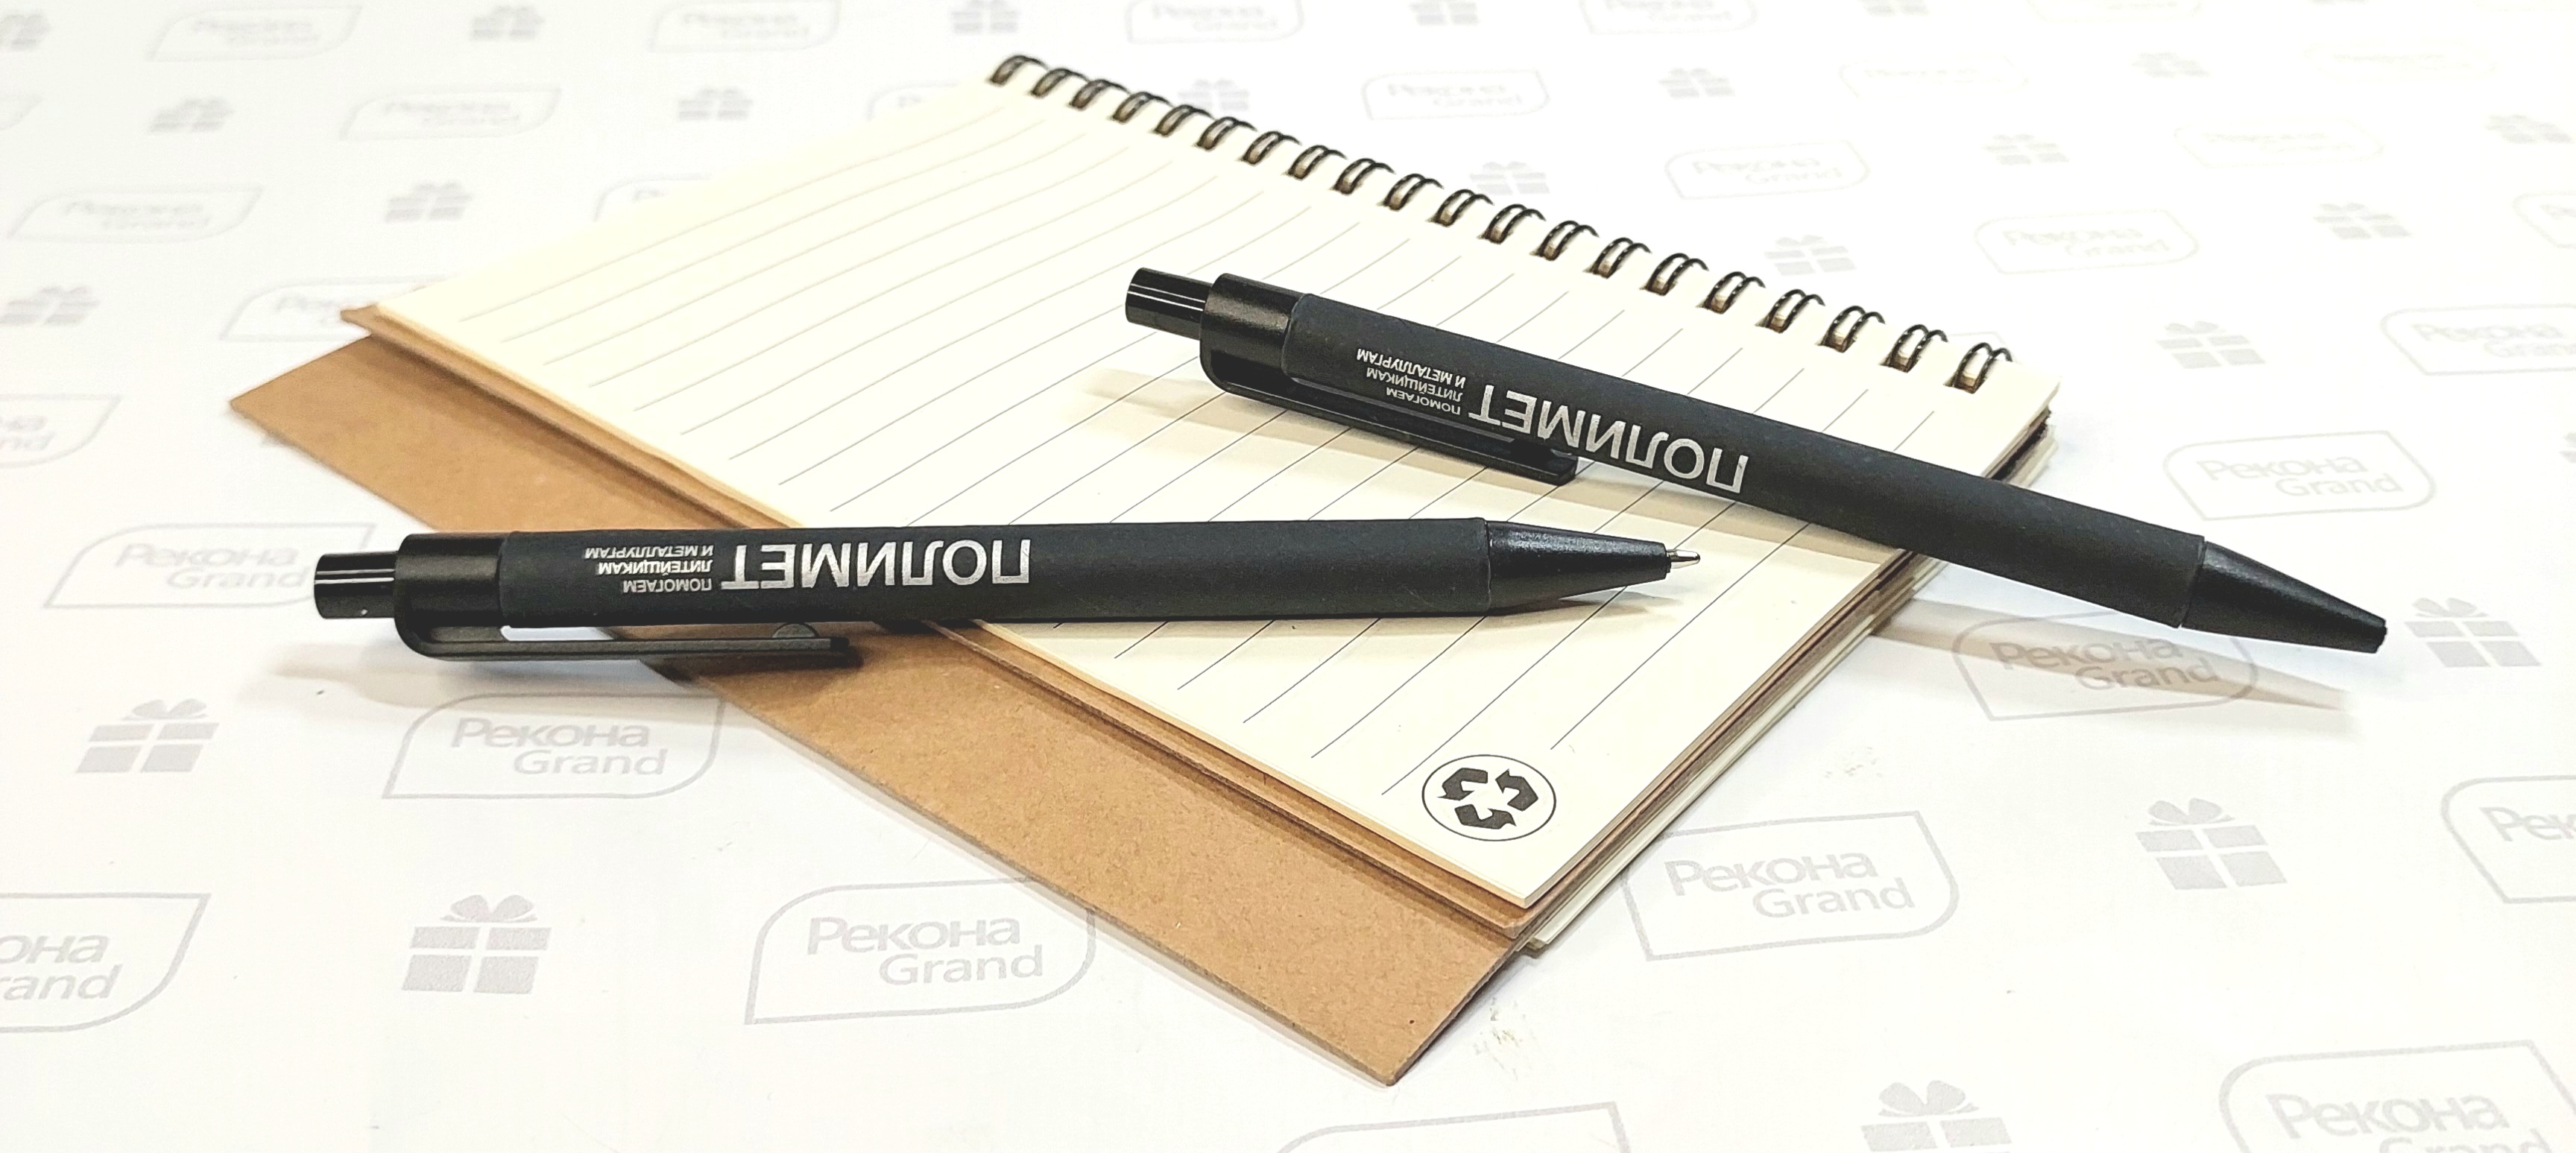 эко ручки с логотипом на заказ